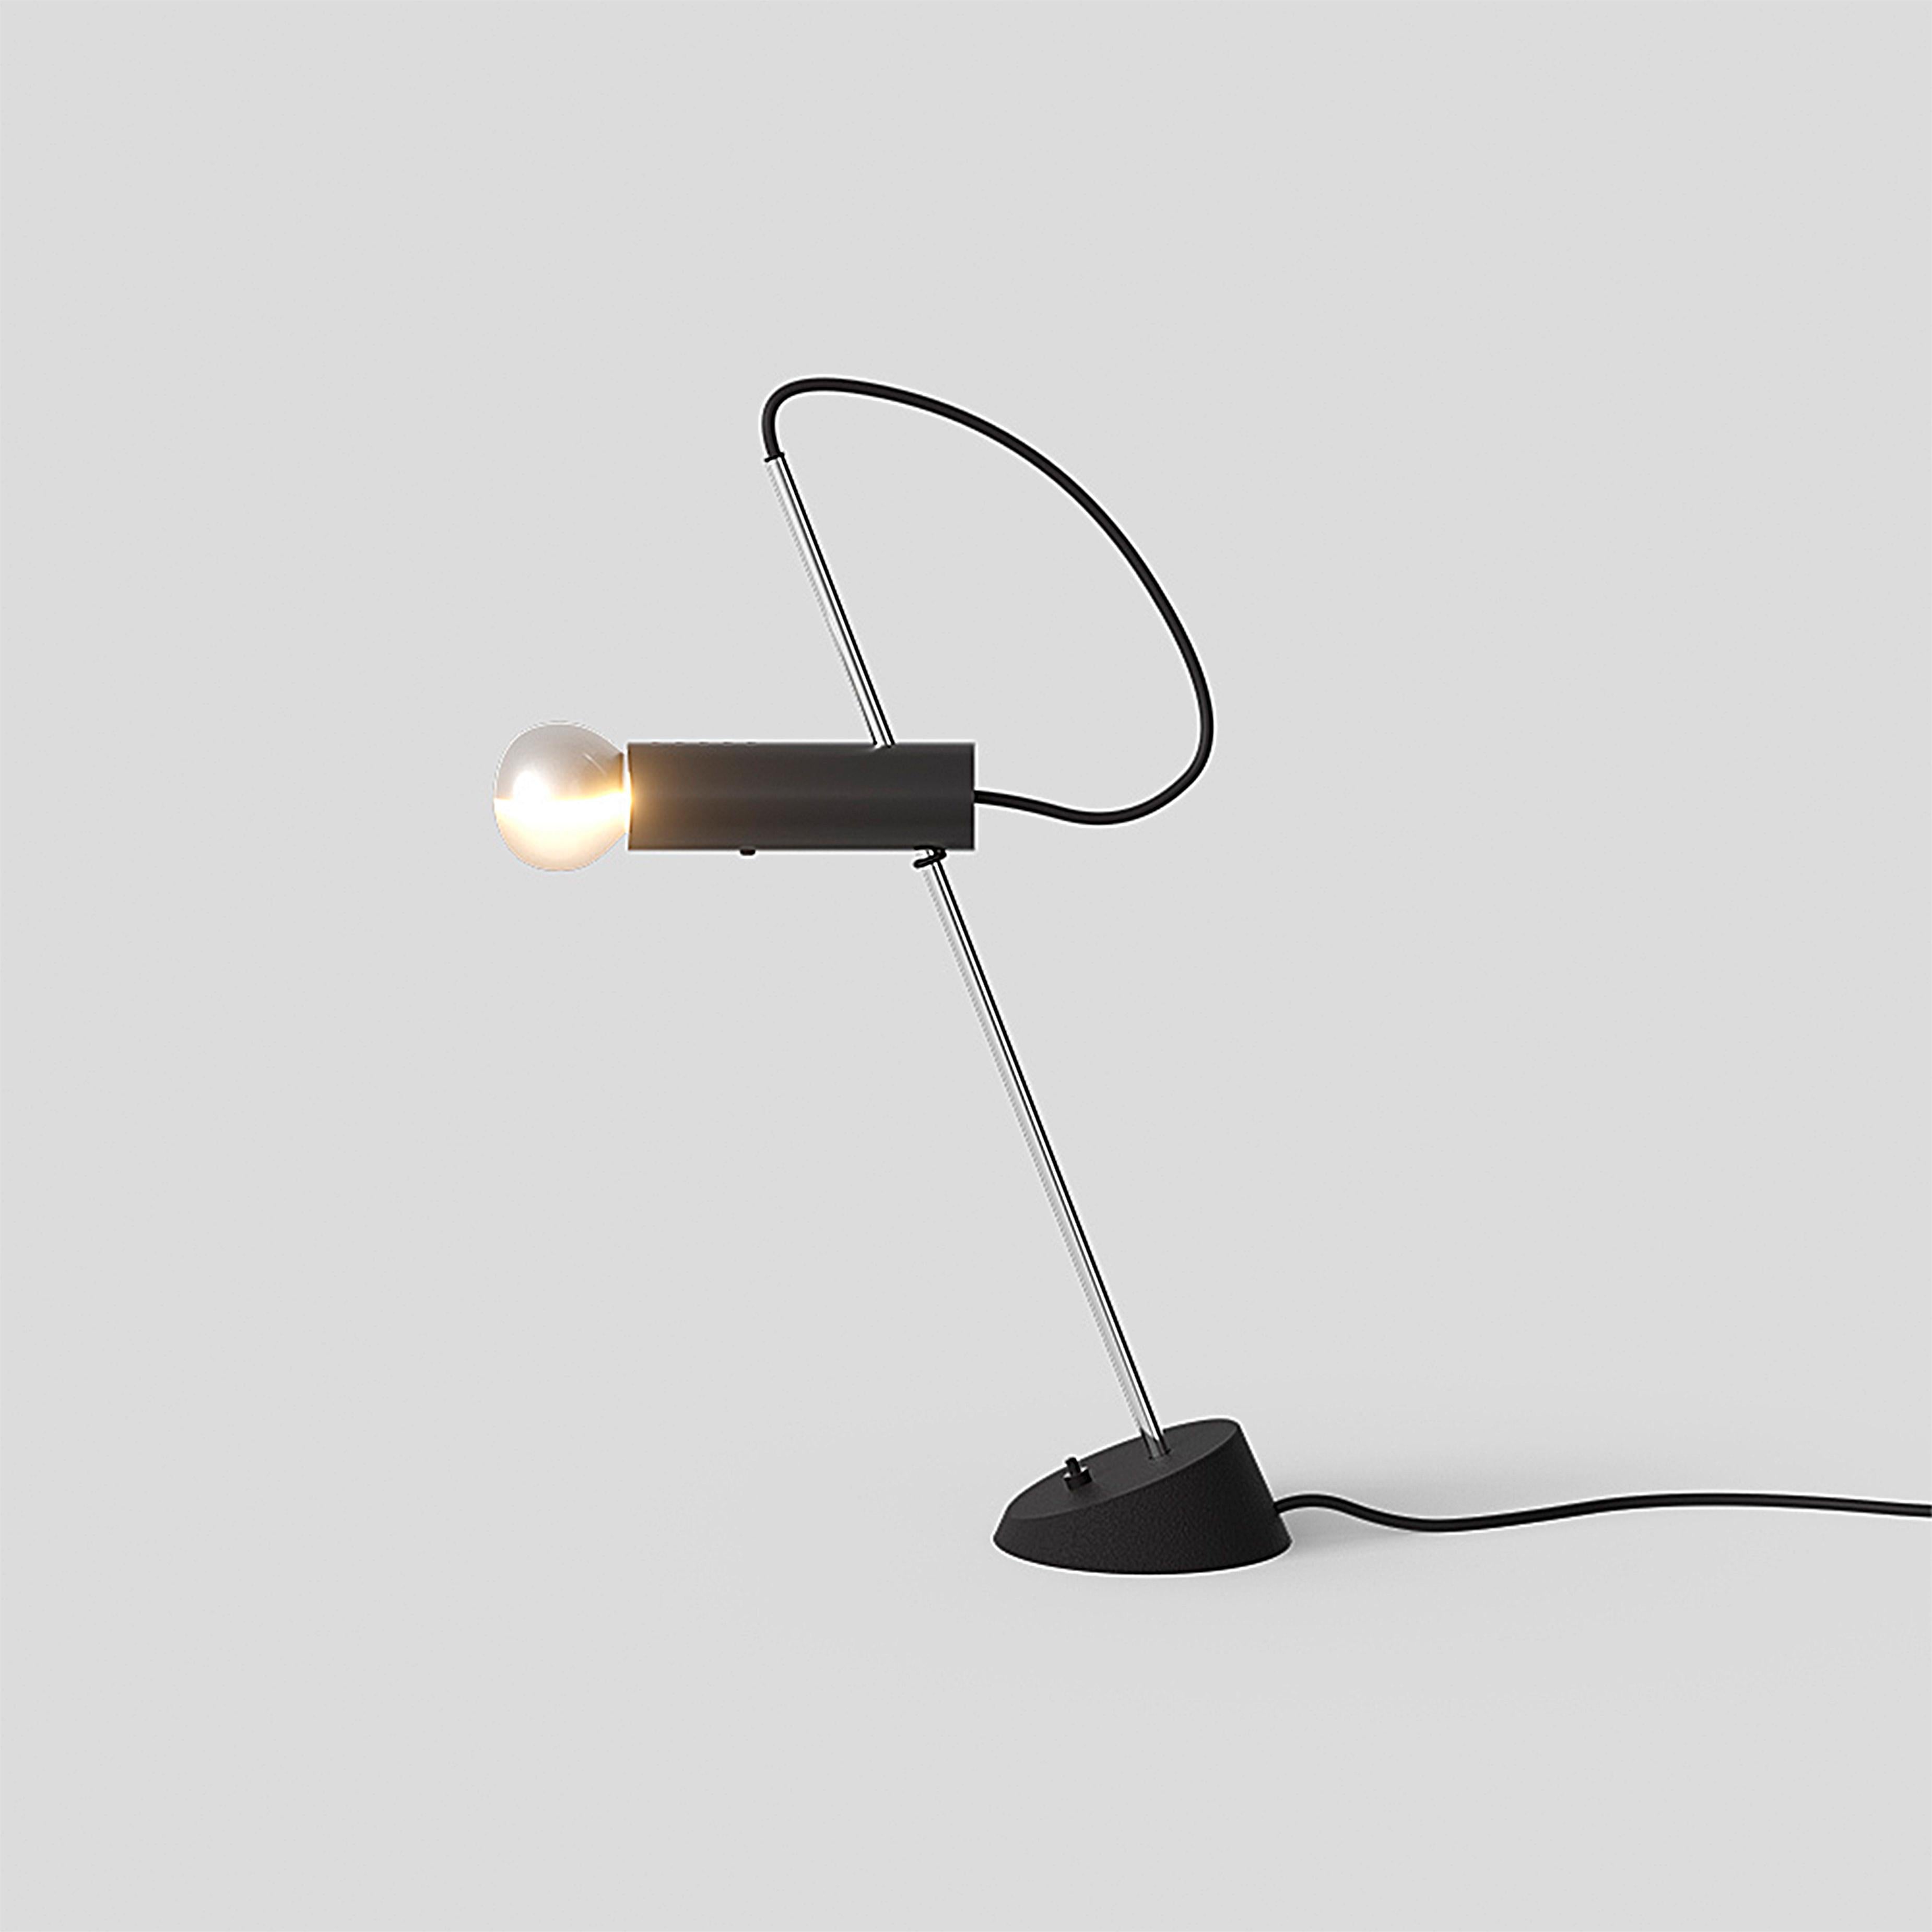 Italian Gino Sarfatti Lamp Model 566 by Astep For Sale